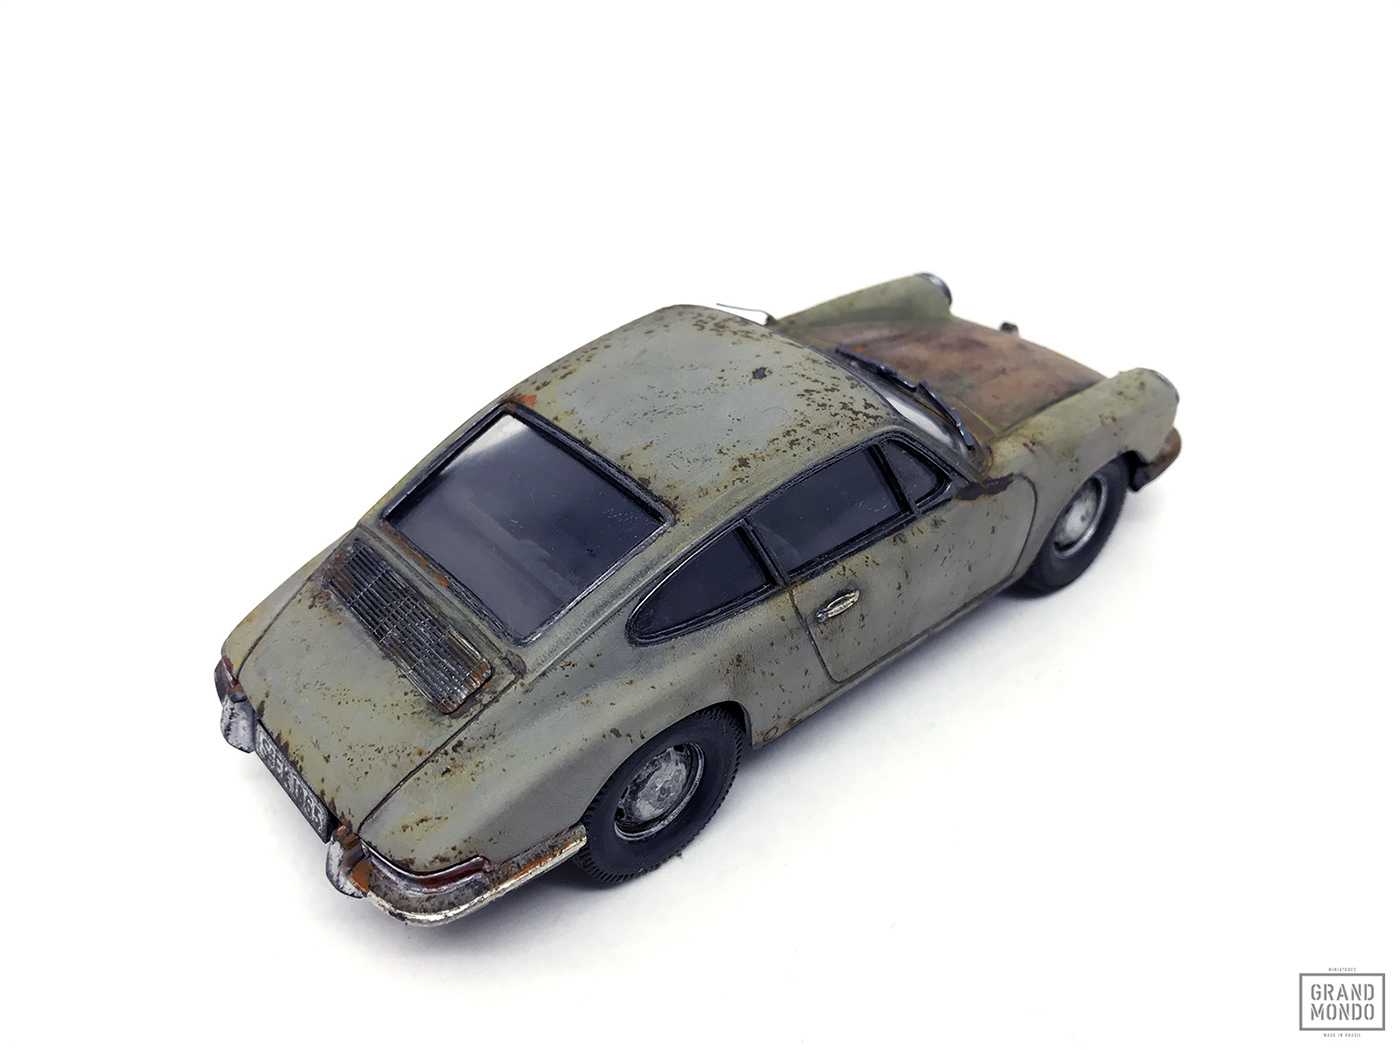 Miniature Diorama abandoned Porsche automotive   scale model art grandmondo handmade process